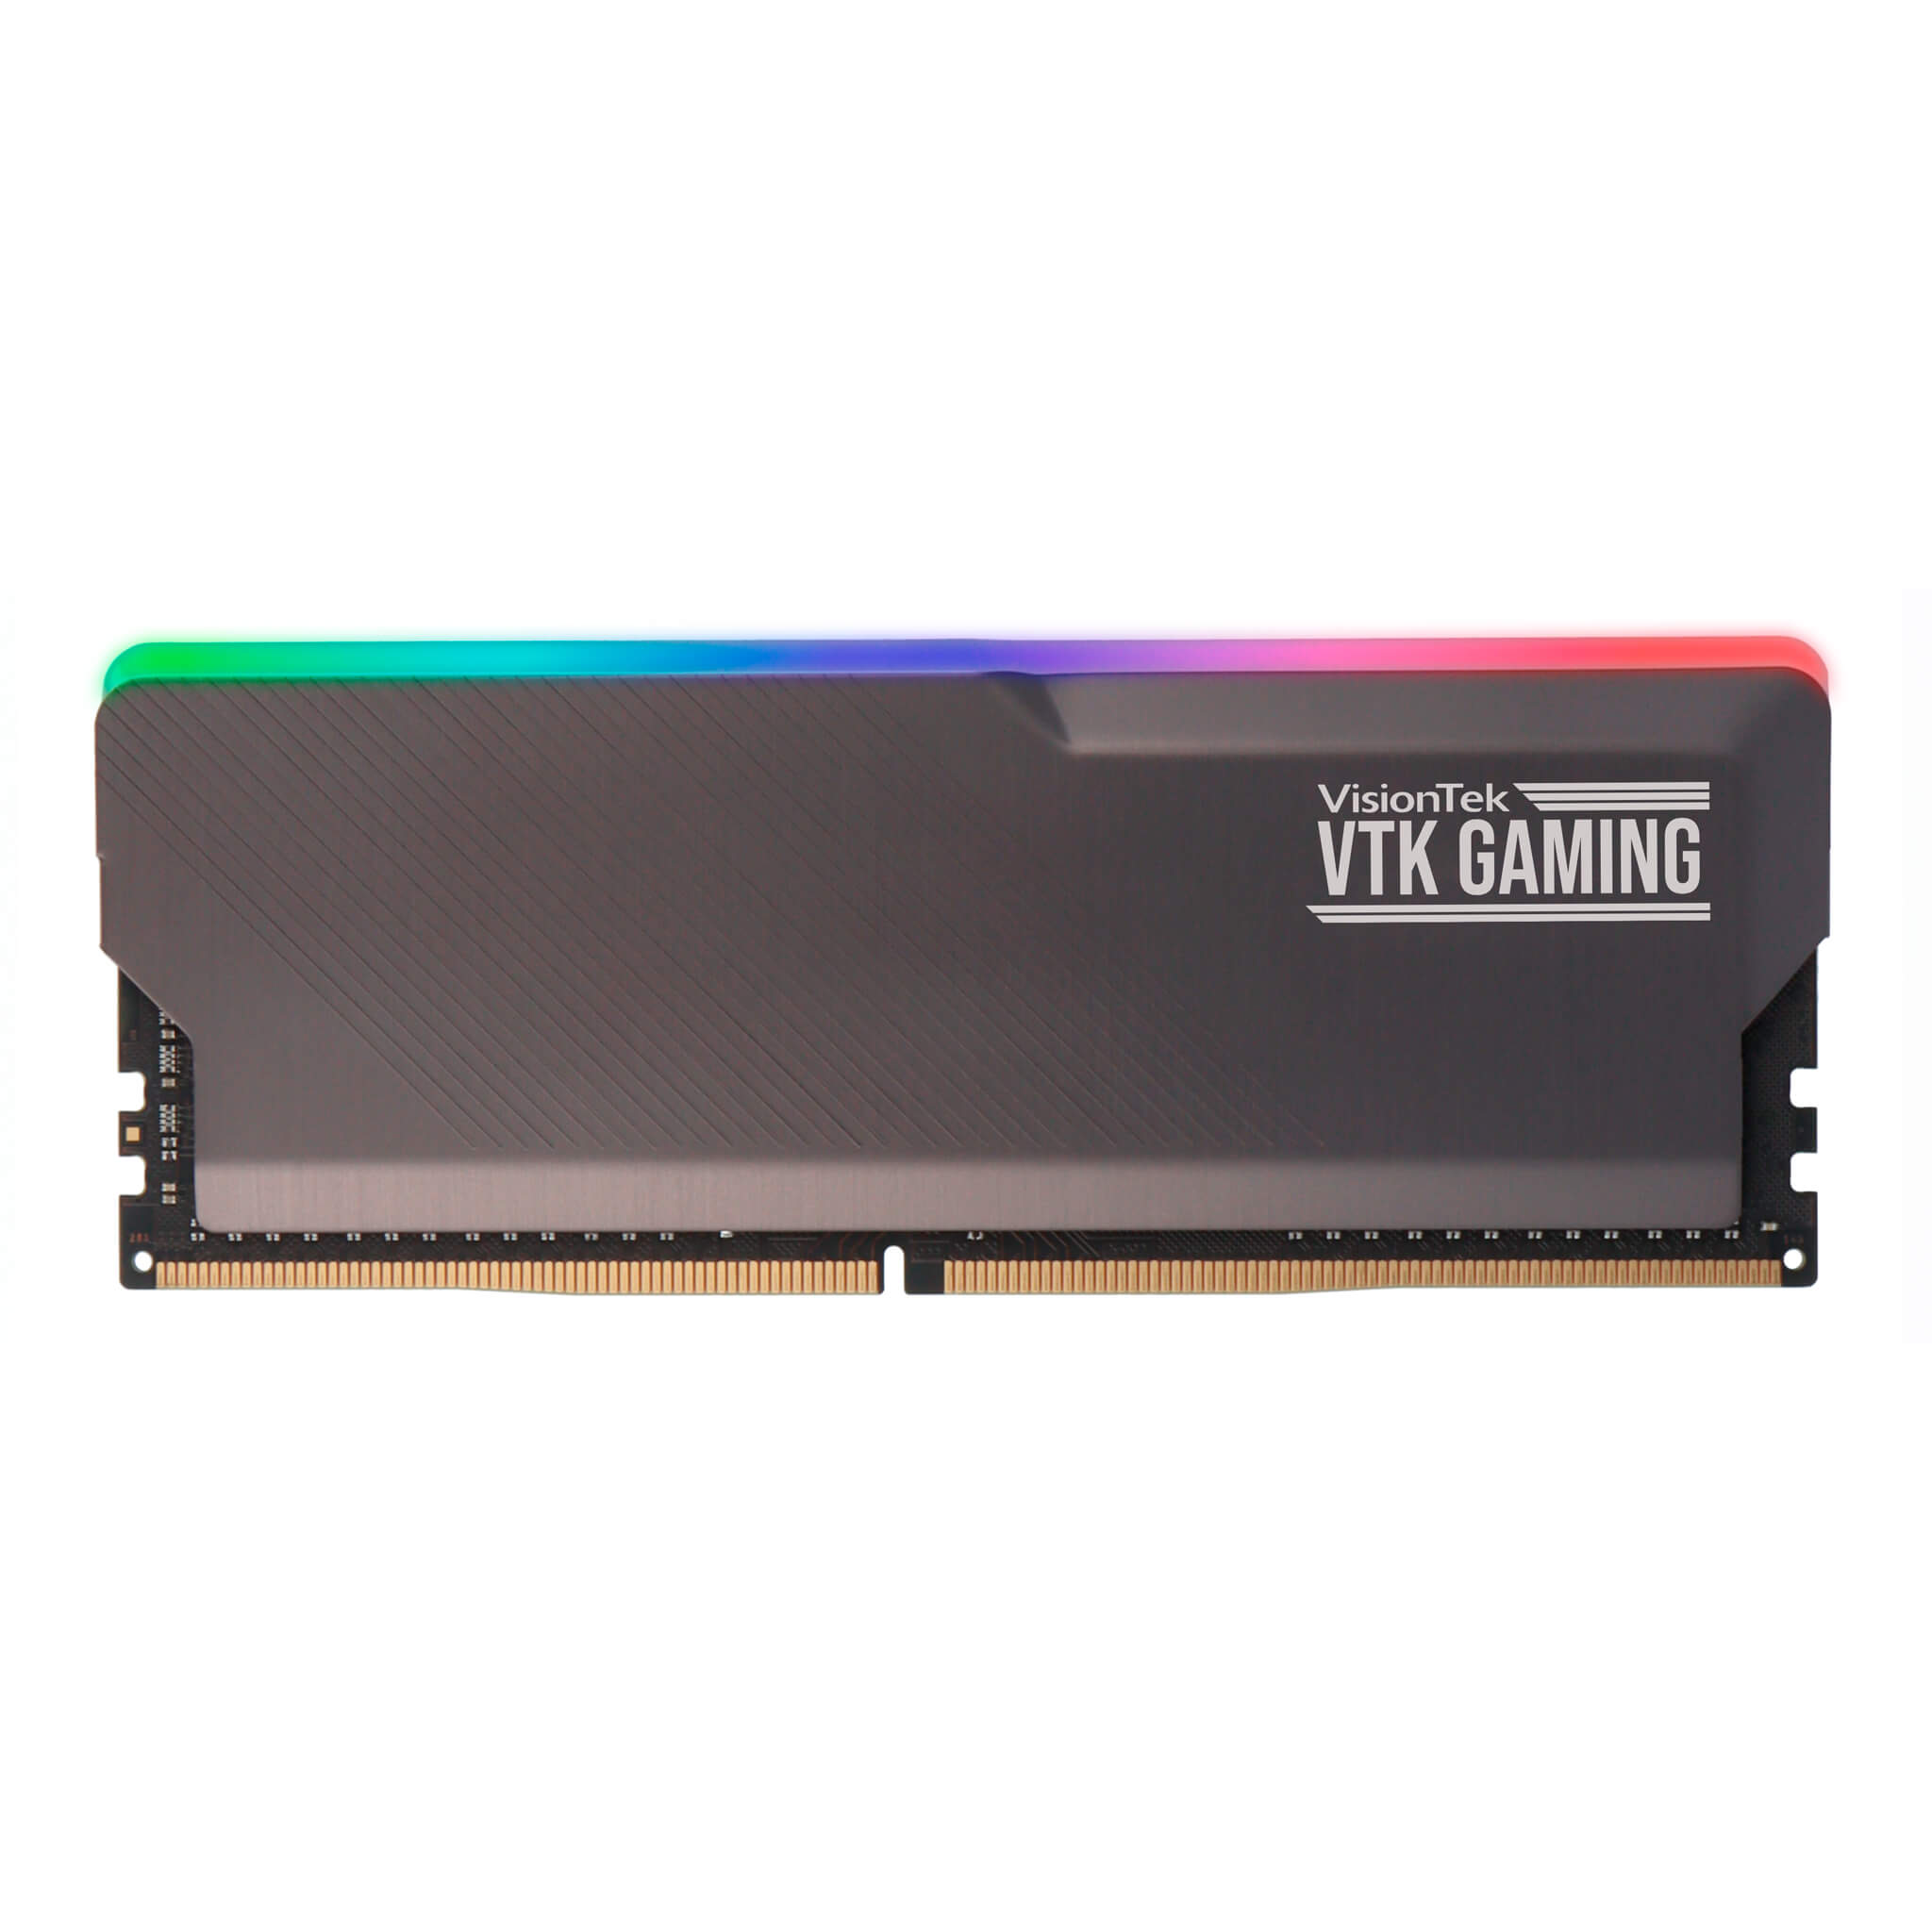 VTK Gaming RGB DDR4 16GB (2x8GB) - 3600MHz - CL19 - DIMM- Desktop